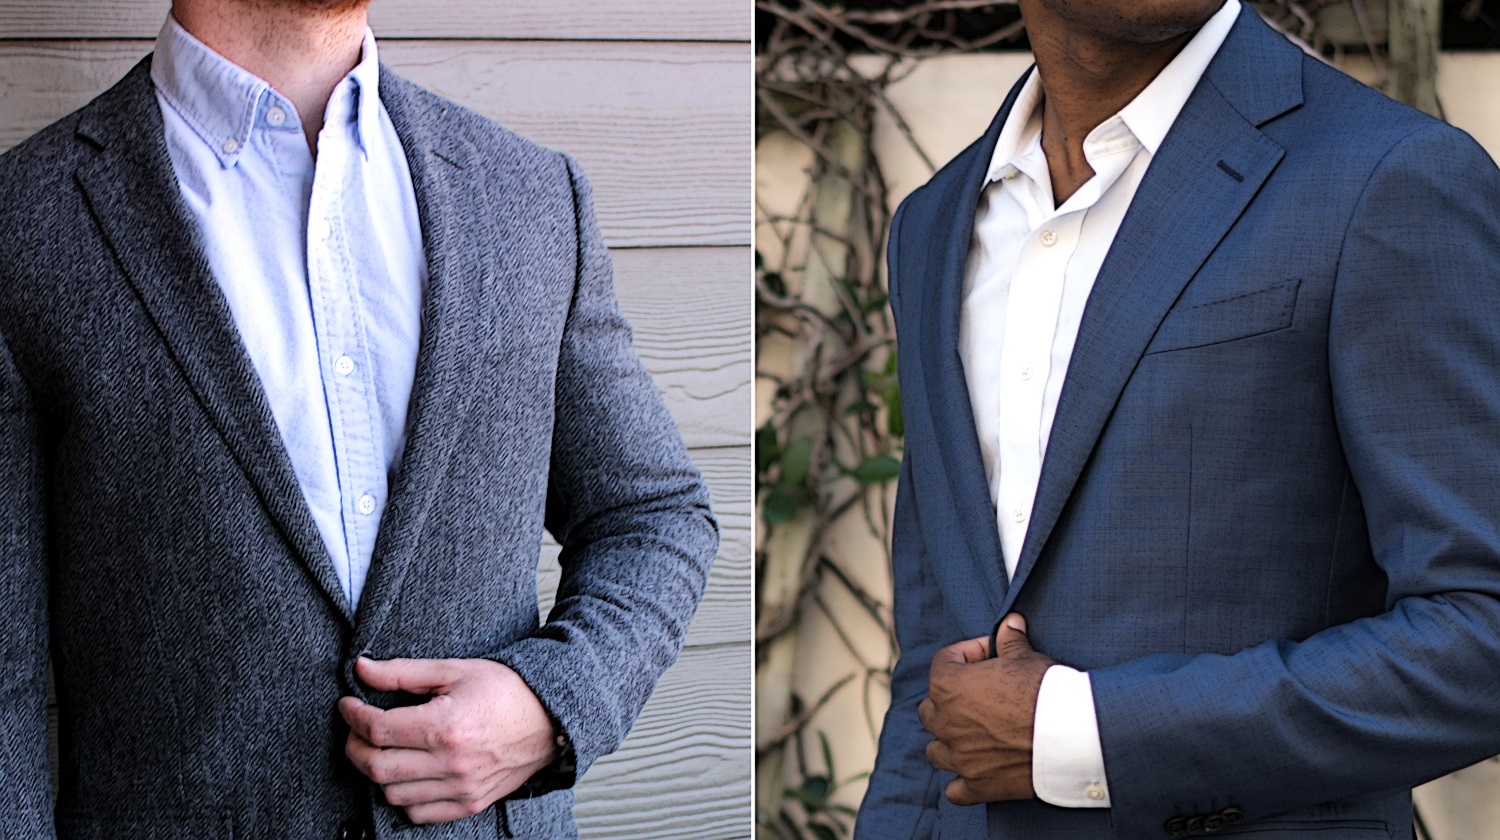 Sportcoat / Blazer vs Suit Jacket – The Four Key Differences